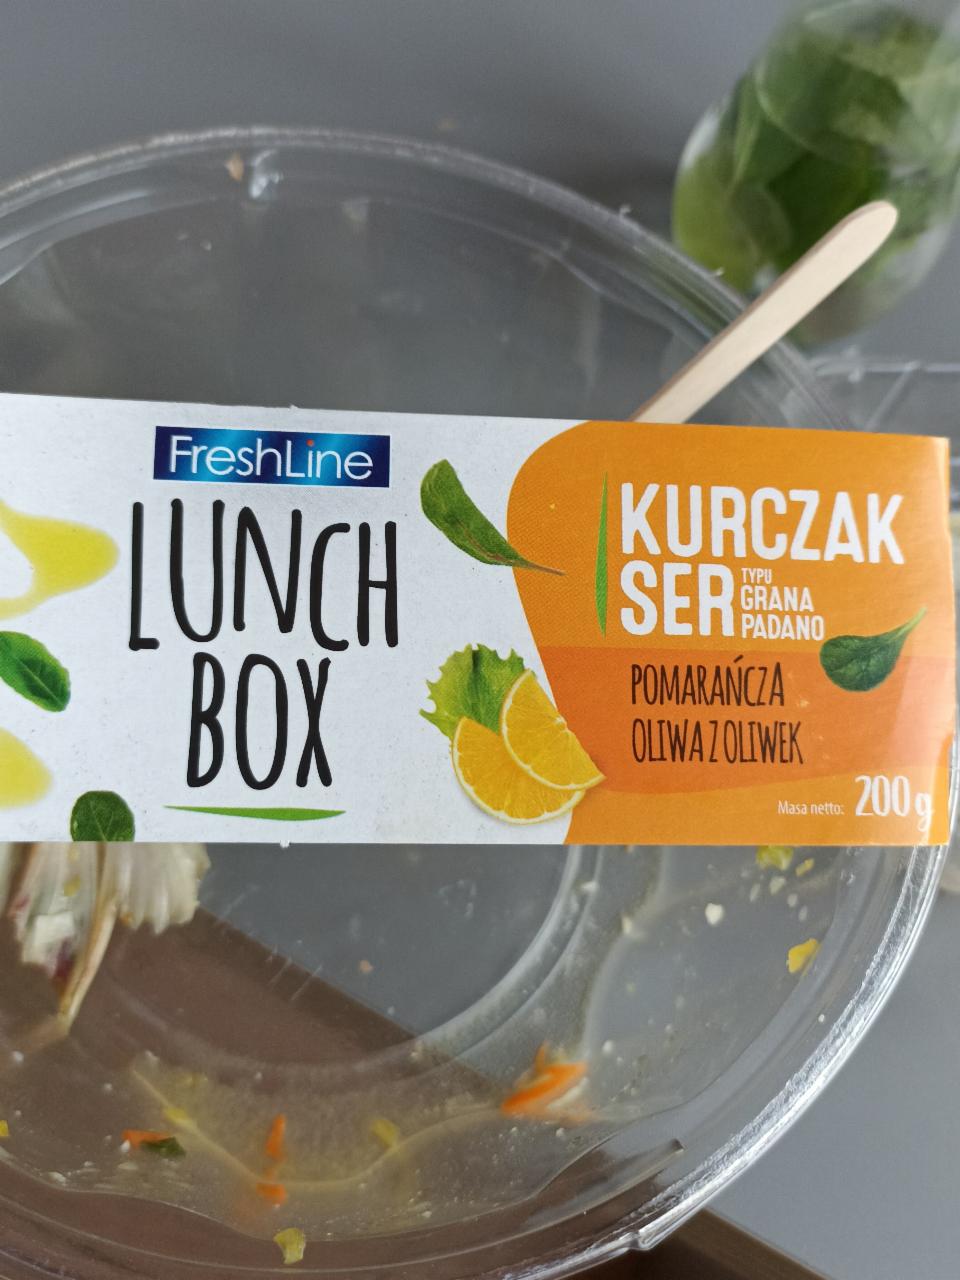 Zdjęcia - Lunch Box kurczak ser FreshLine